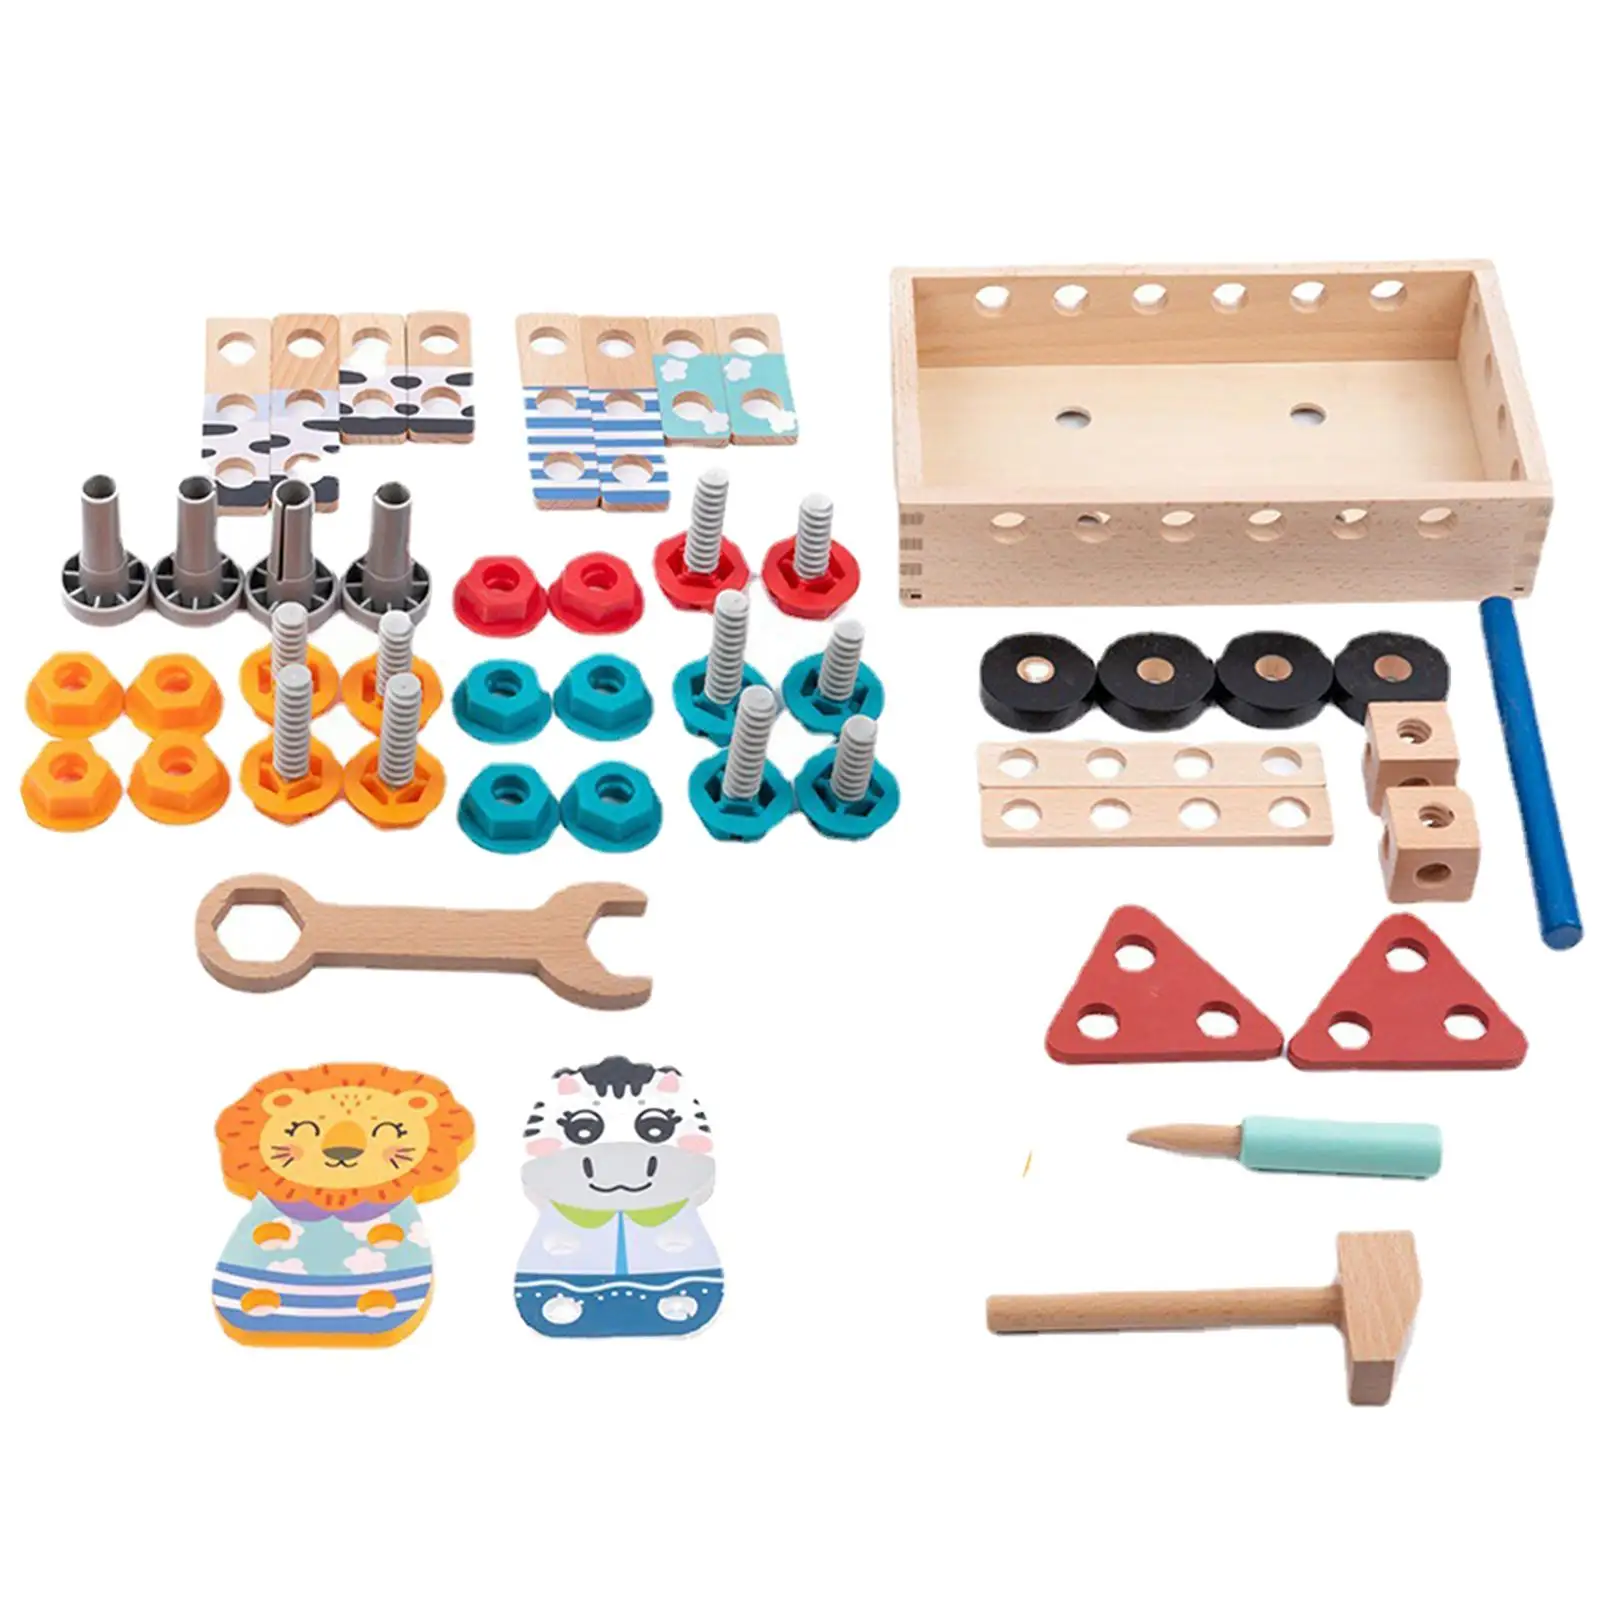 DIY Construction Toy Cognitive Developmental montessori Toolbox Set for Indoor Preschool Education Role Play Outdoor